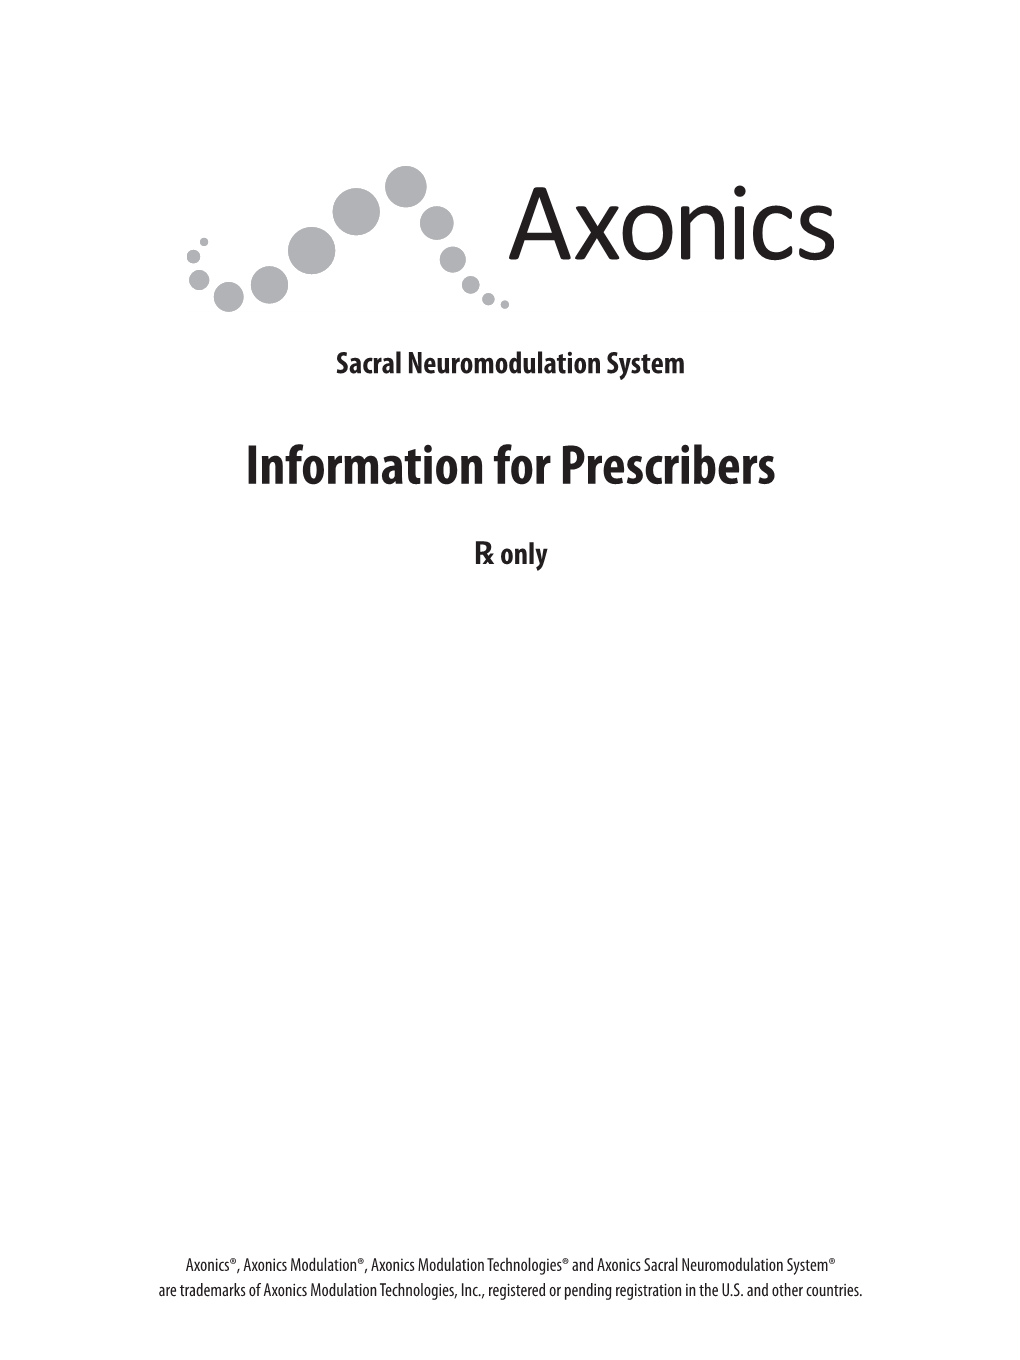 Information for Prescribers